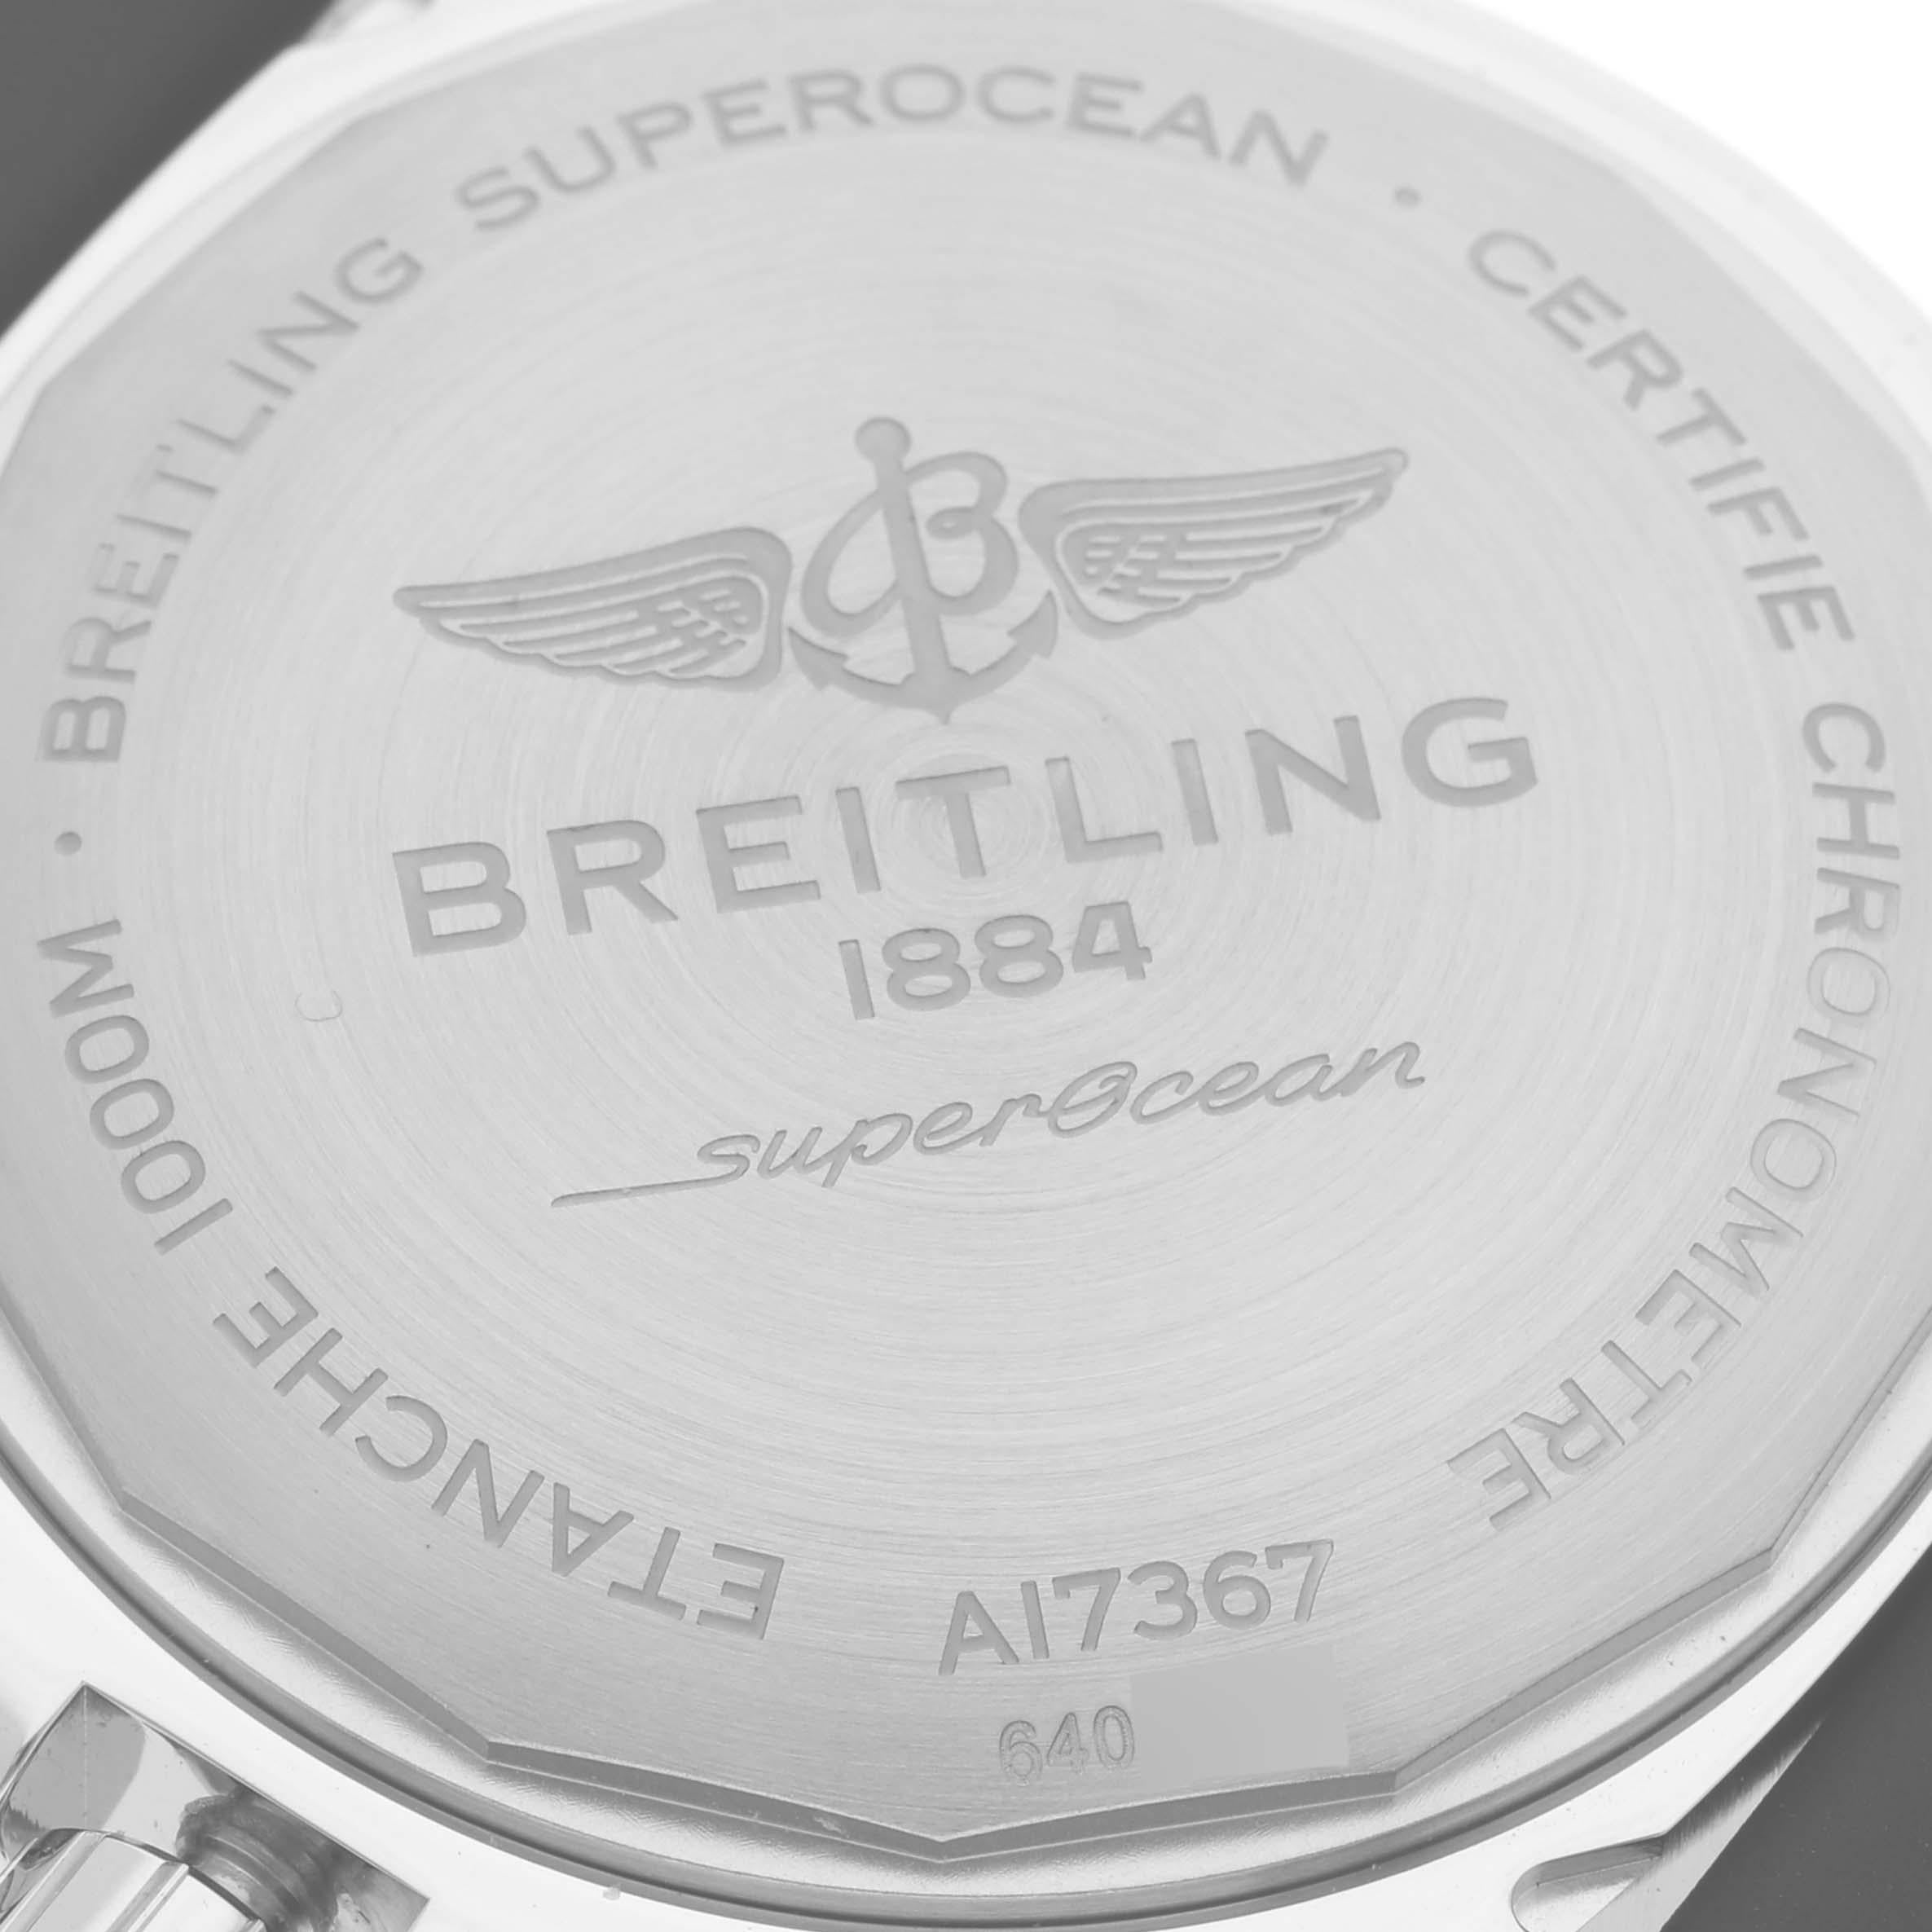 Breitling Superocean II Yellow Dial Steel Mens Watch A17367 Unworn In Excellent Condition For Sale In Atlanta, GA